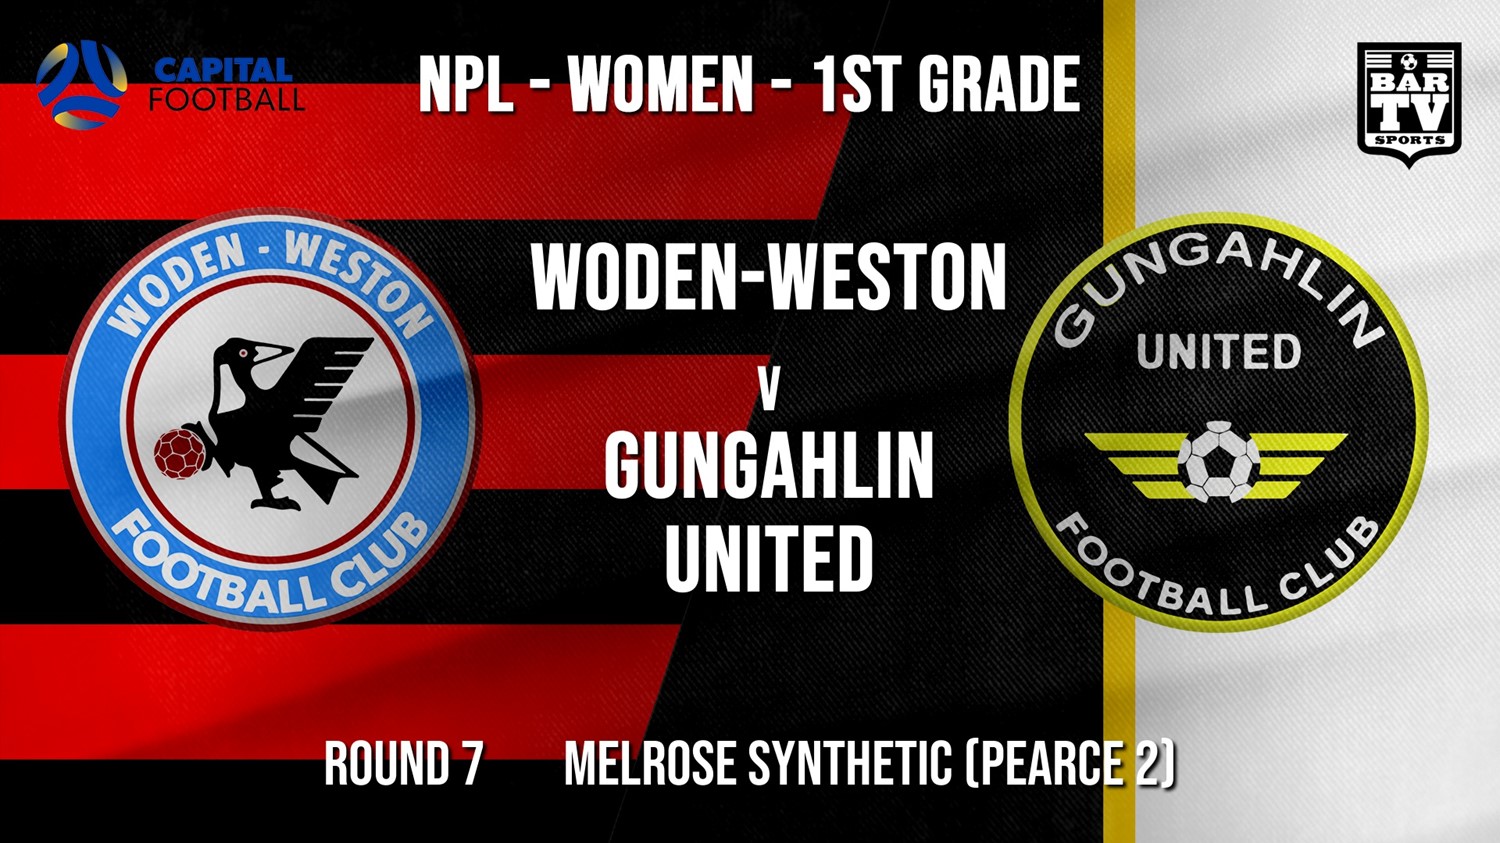 NPLW - Capital Round 7 - Woden-Weston FC (women) v Gungahlin United FC (women) Minigame Slate Image